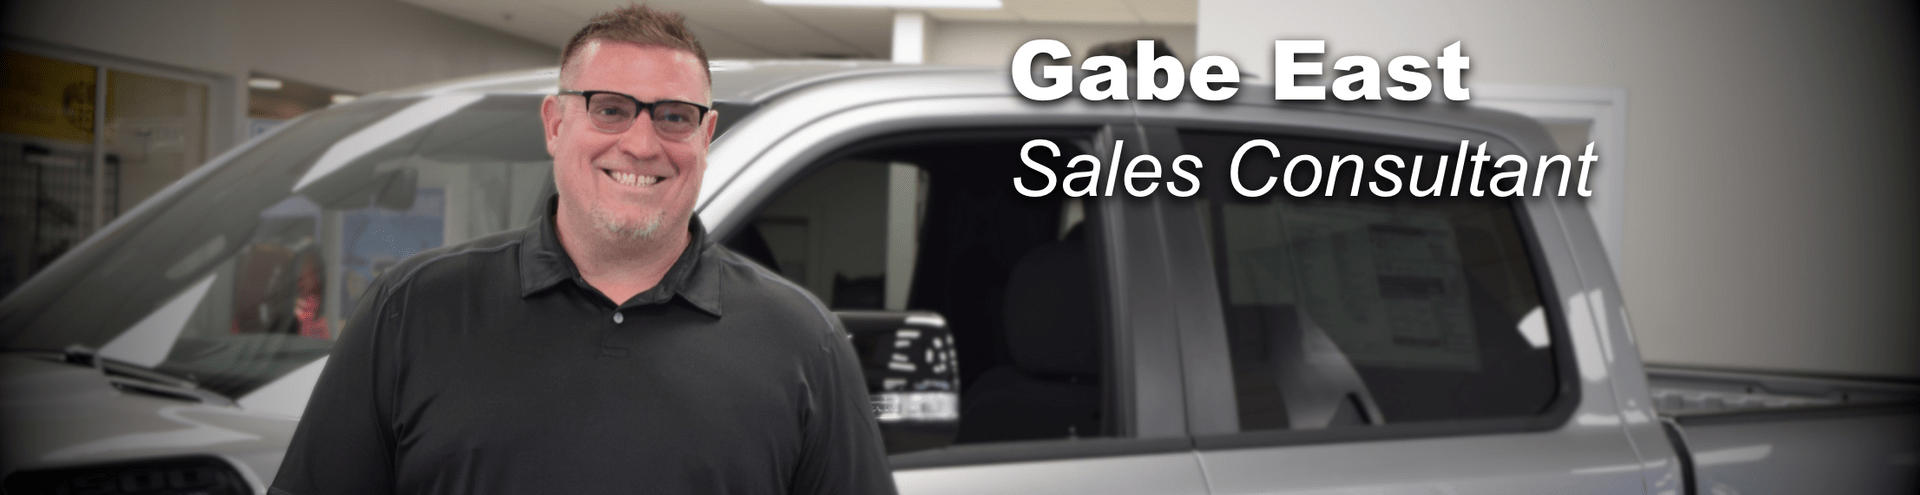 gabe east sales consultant prestige chrysler dodge jeep ram